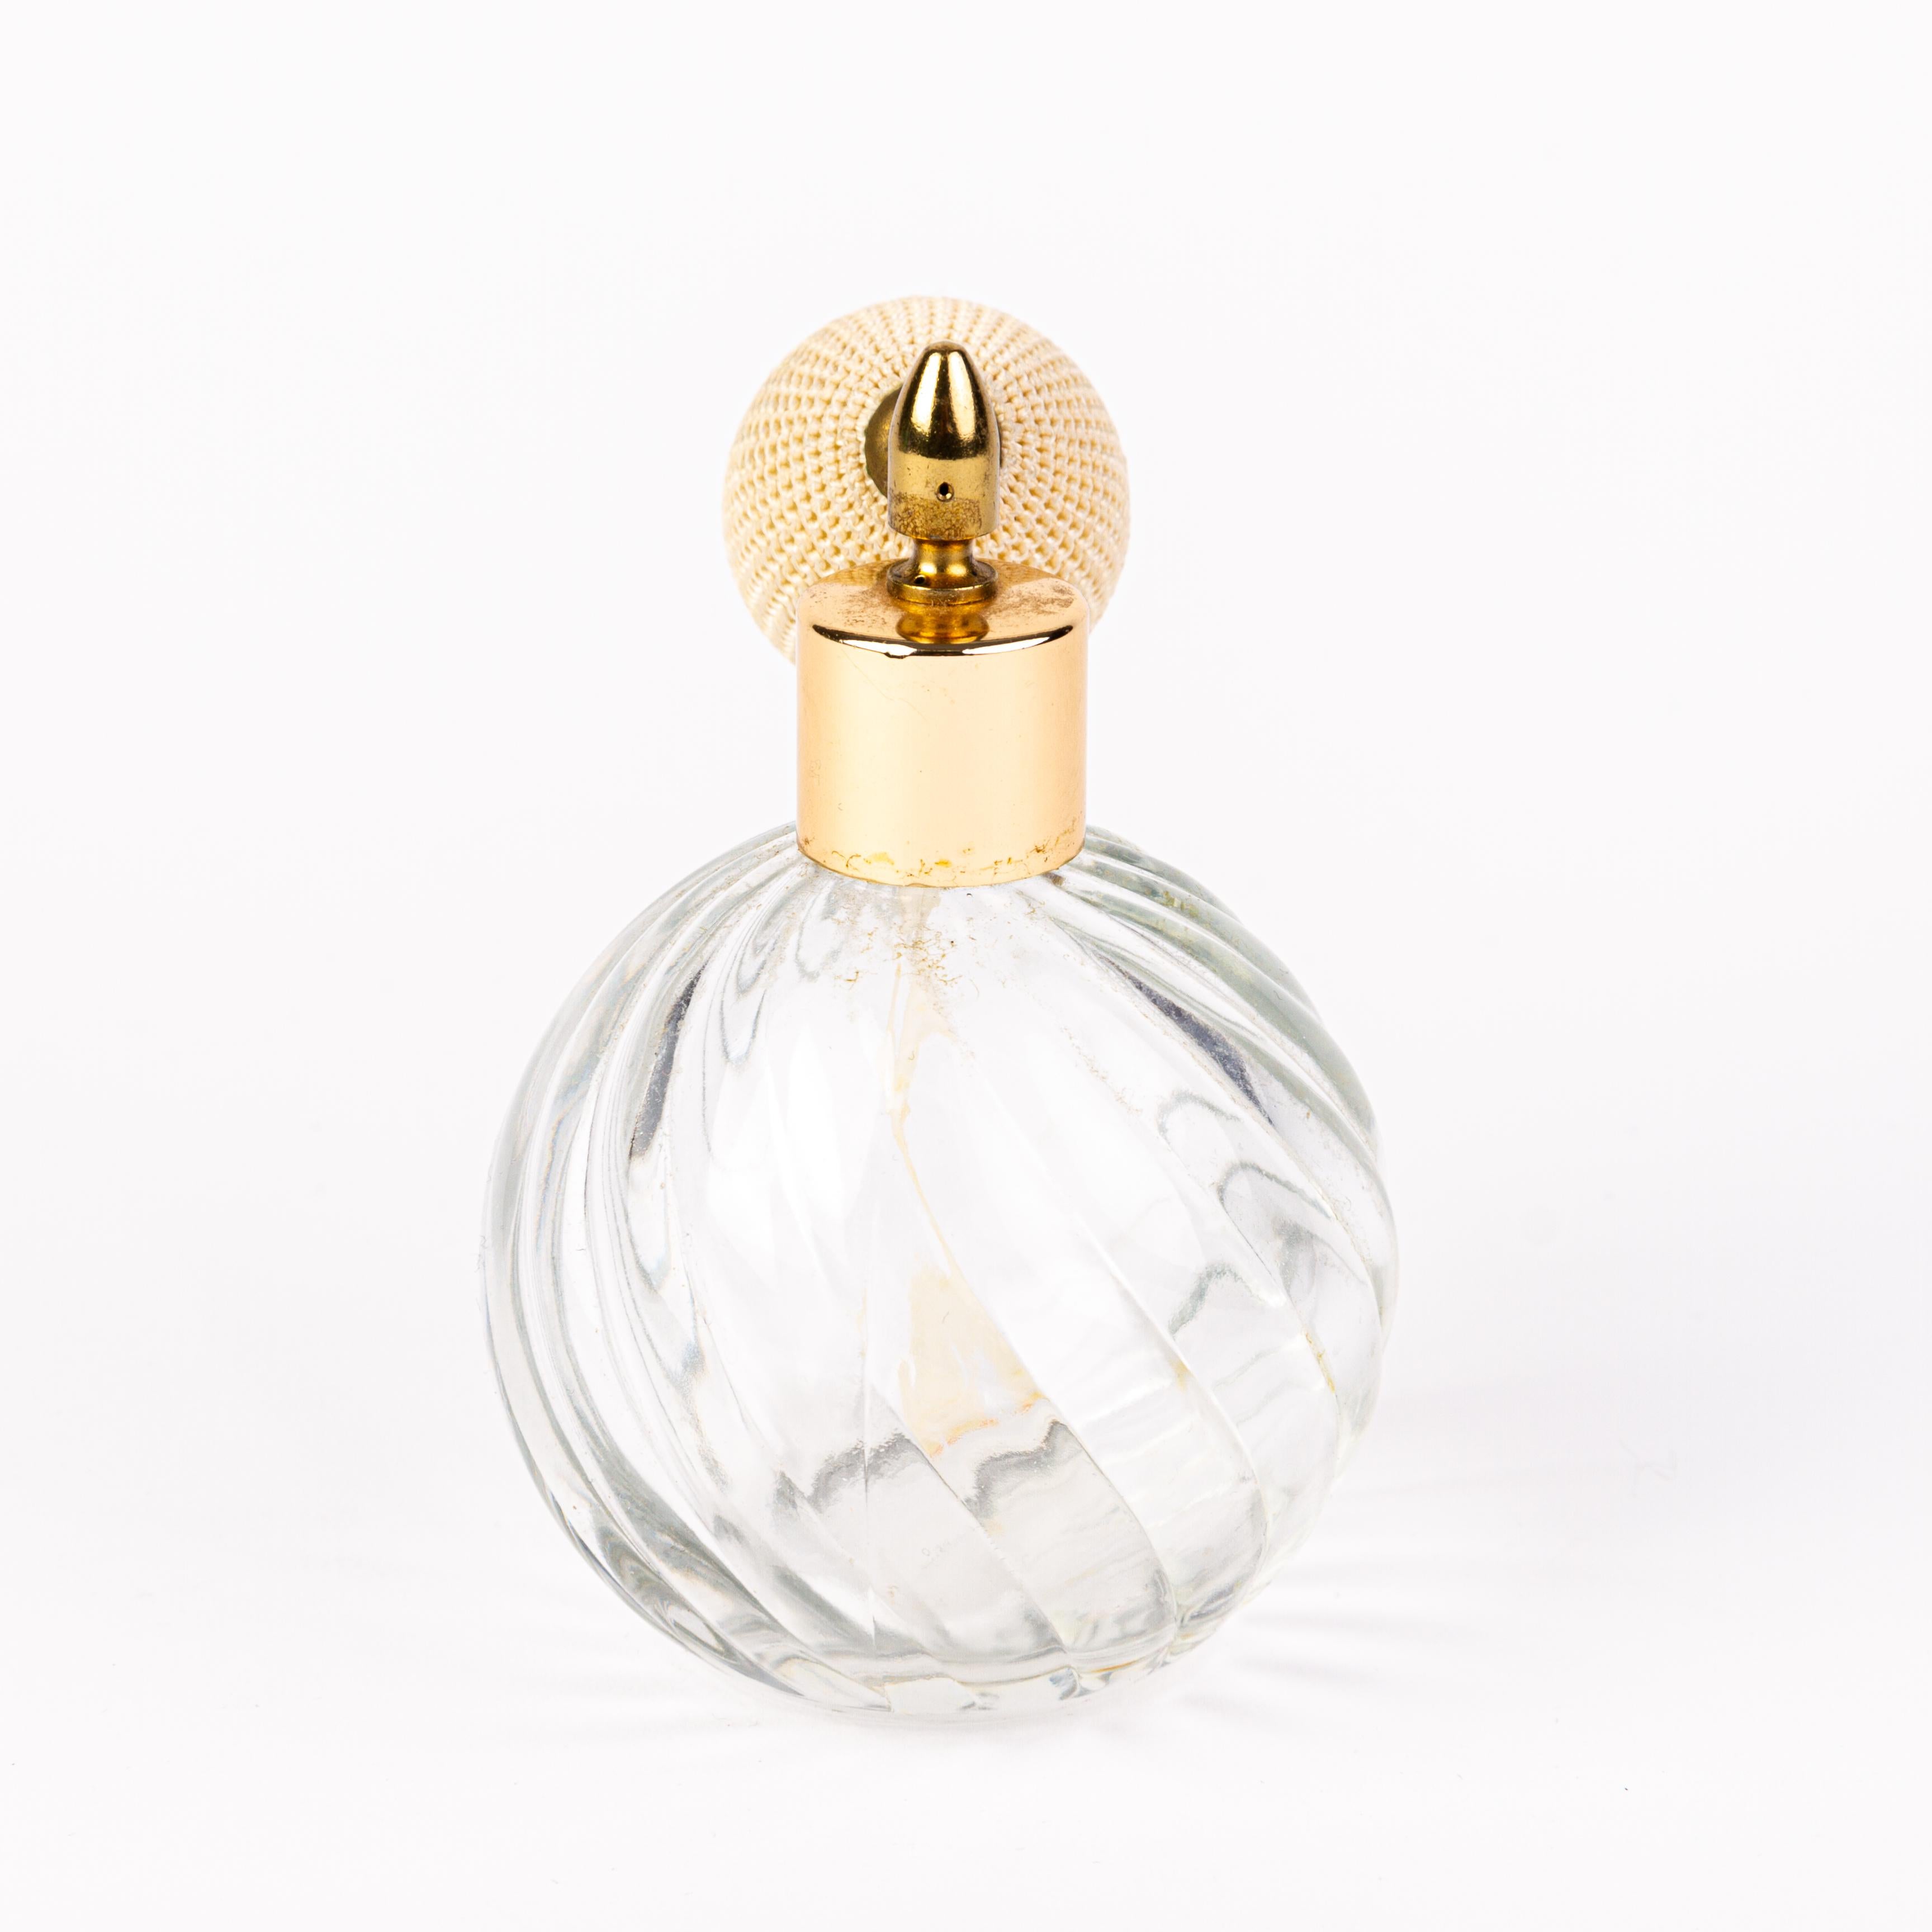 Venetian Crystal Glass Perfume Atomiser Bottle 
Good condition
Free international shipping.